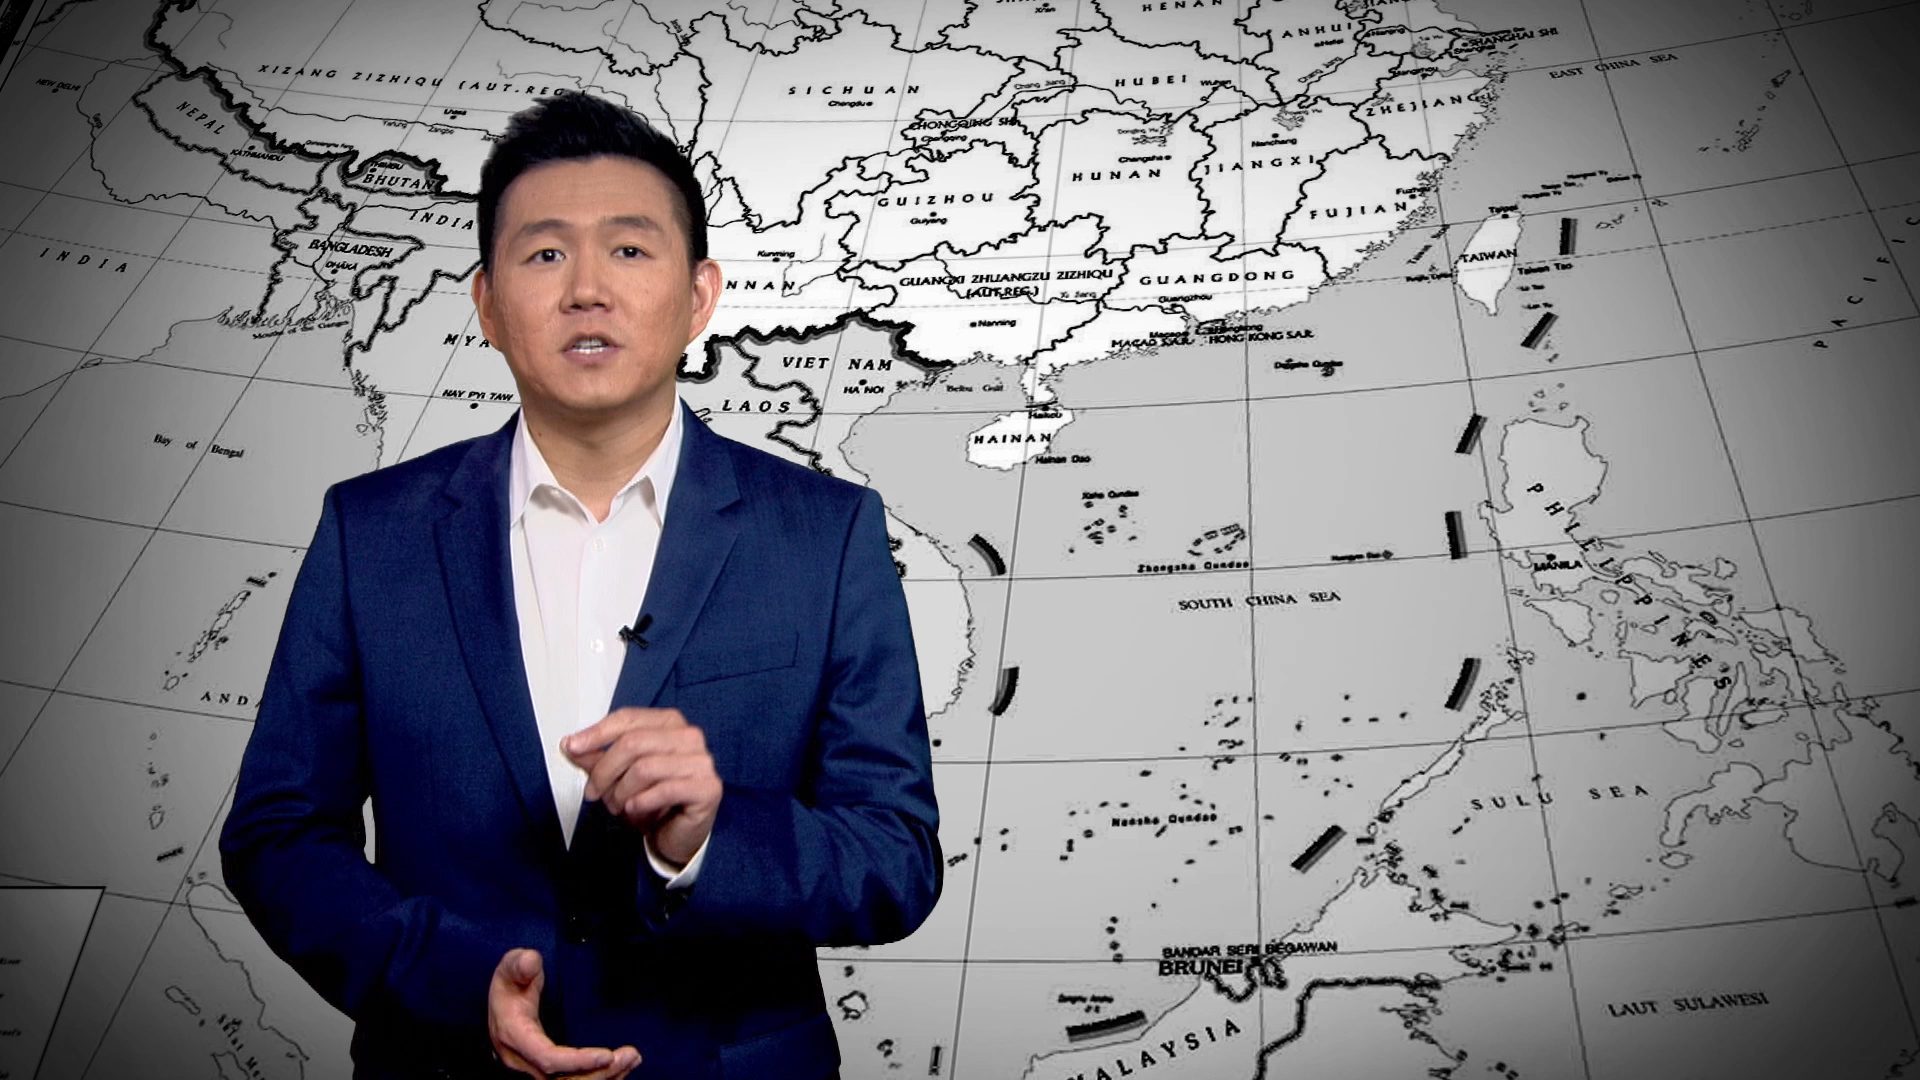 Explaining the South China Sea